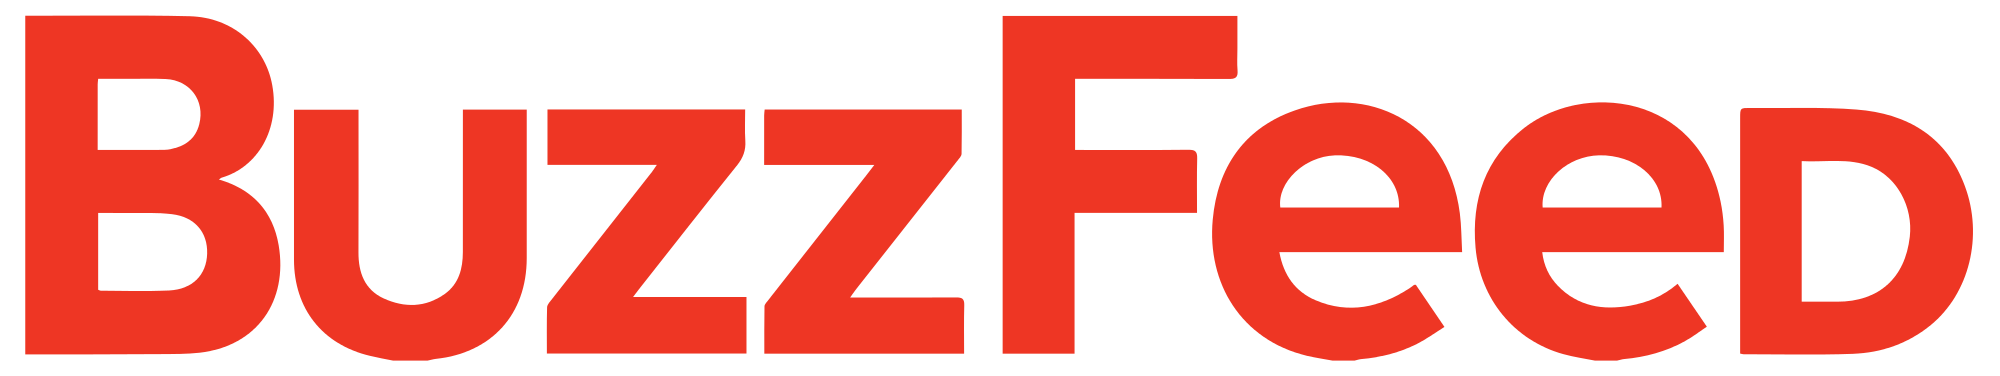 Buzzfeed Logo Transparent Png